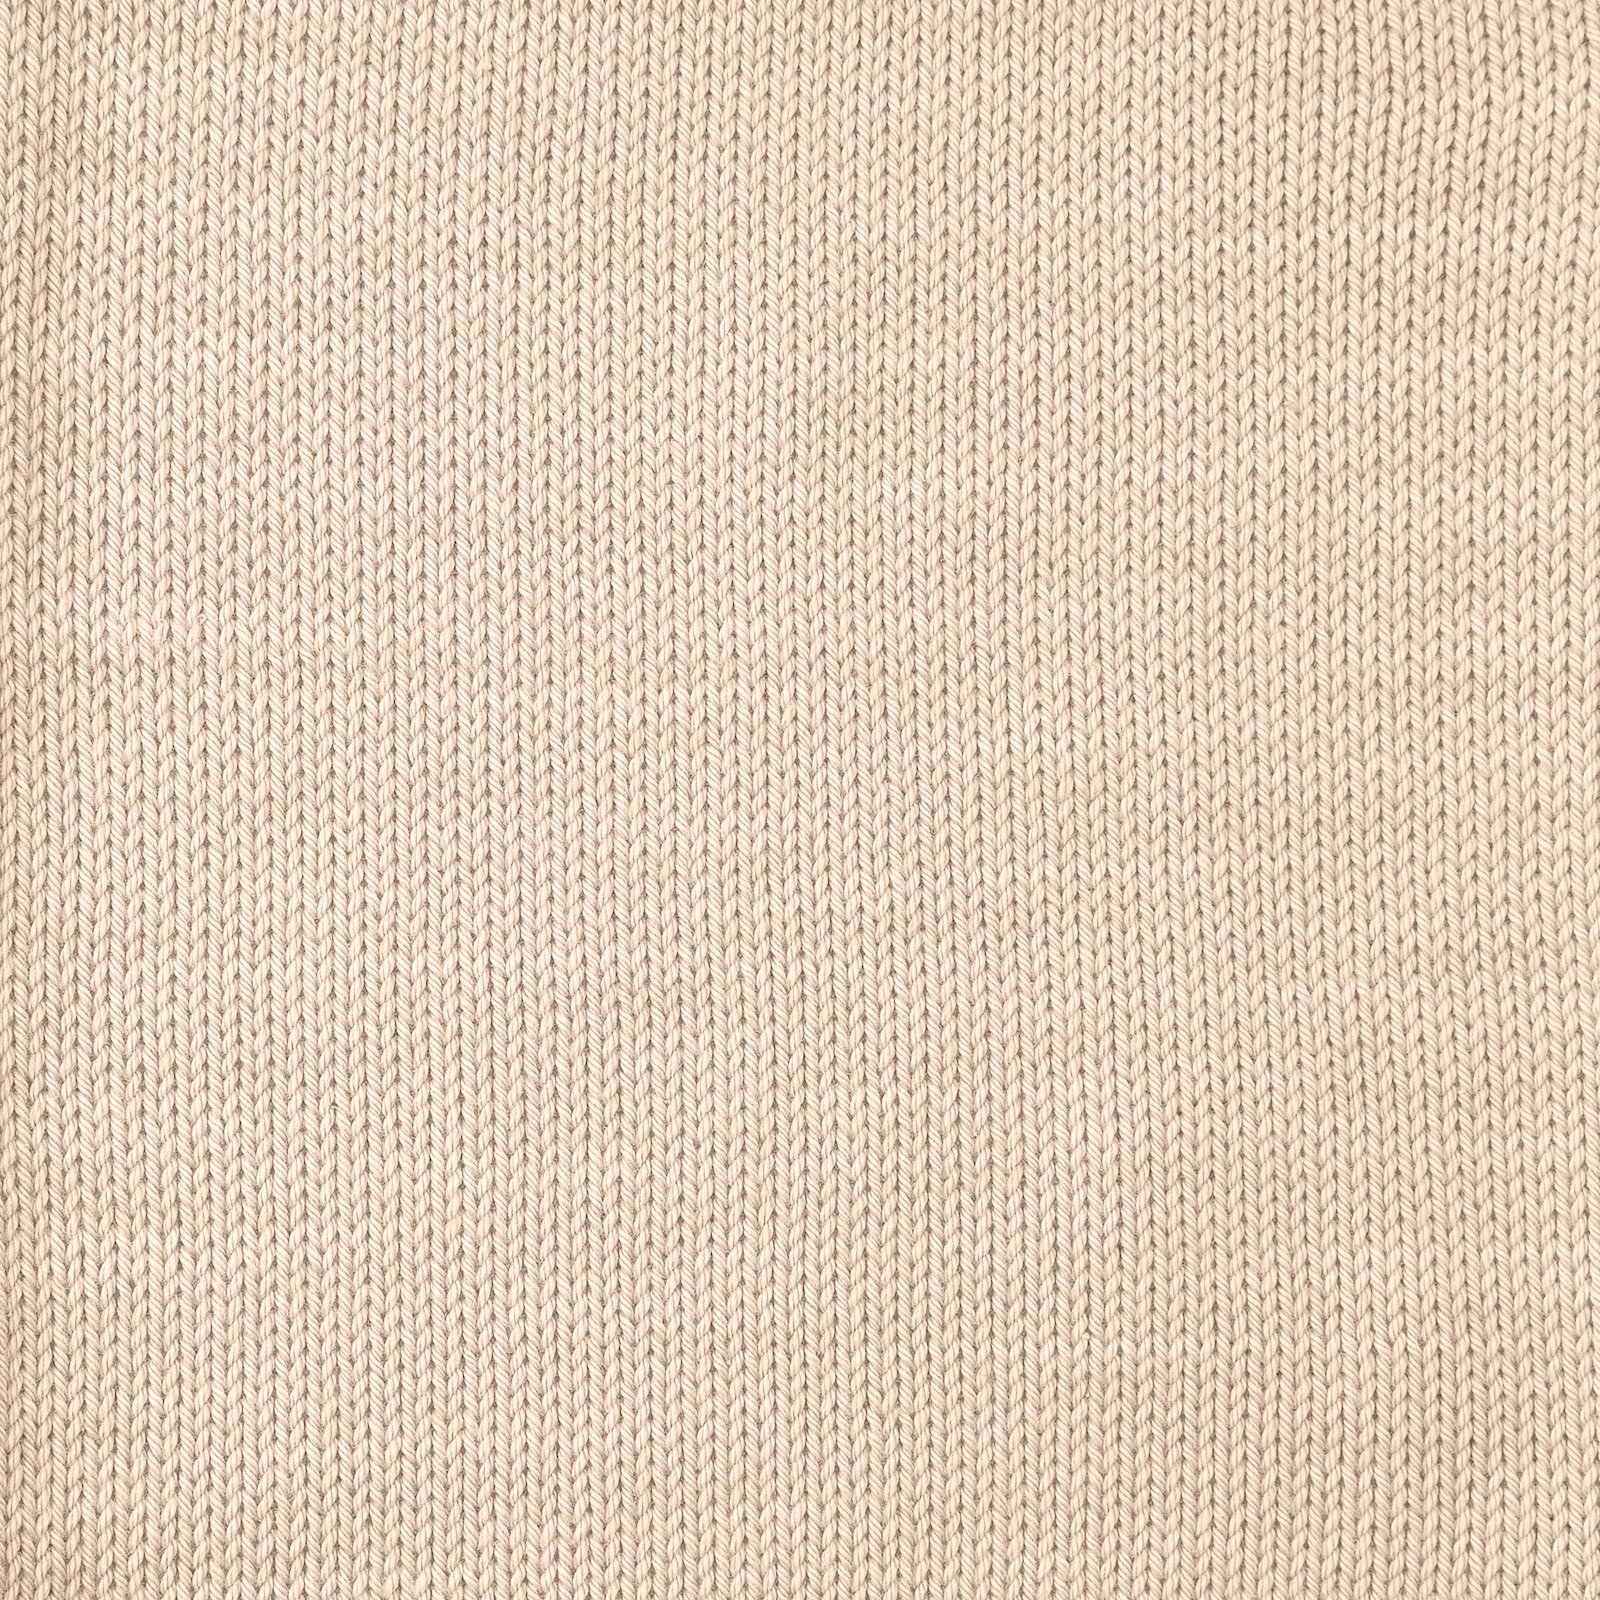 FRAYA, 100% cotton yarn "Colourful", powder 90060072_sskit